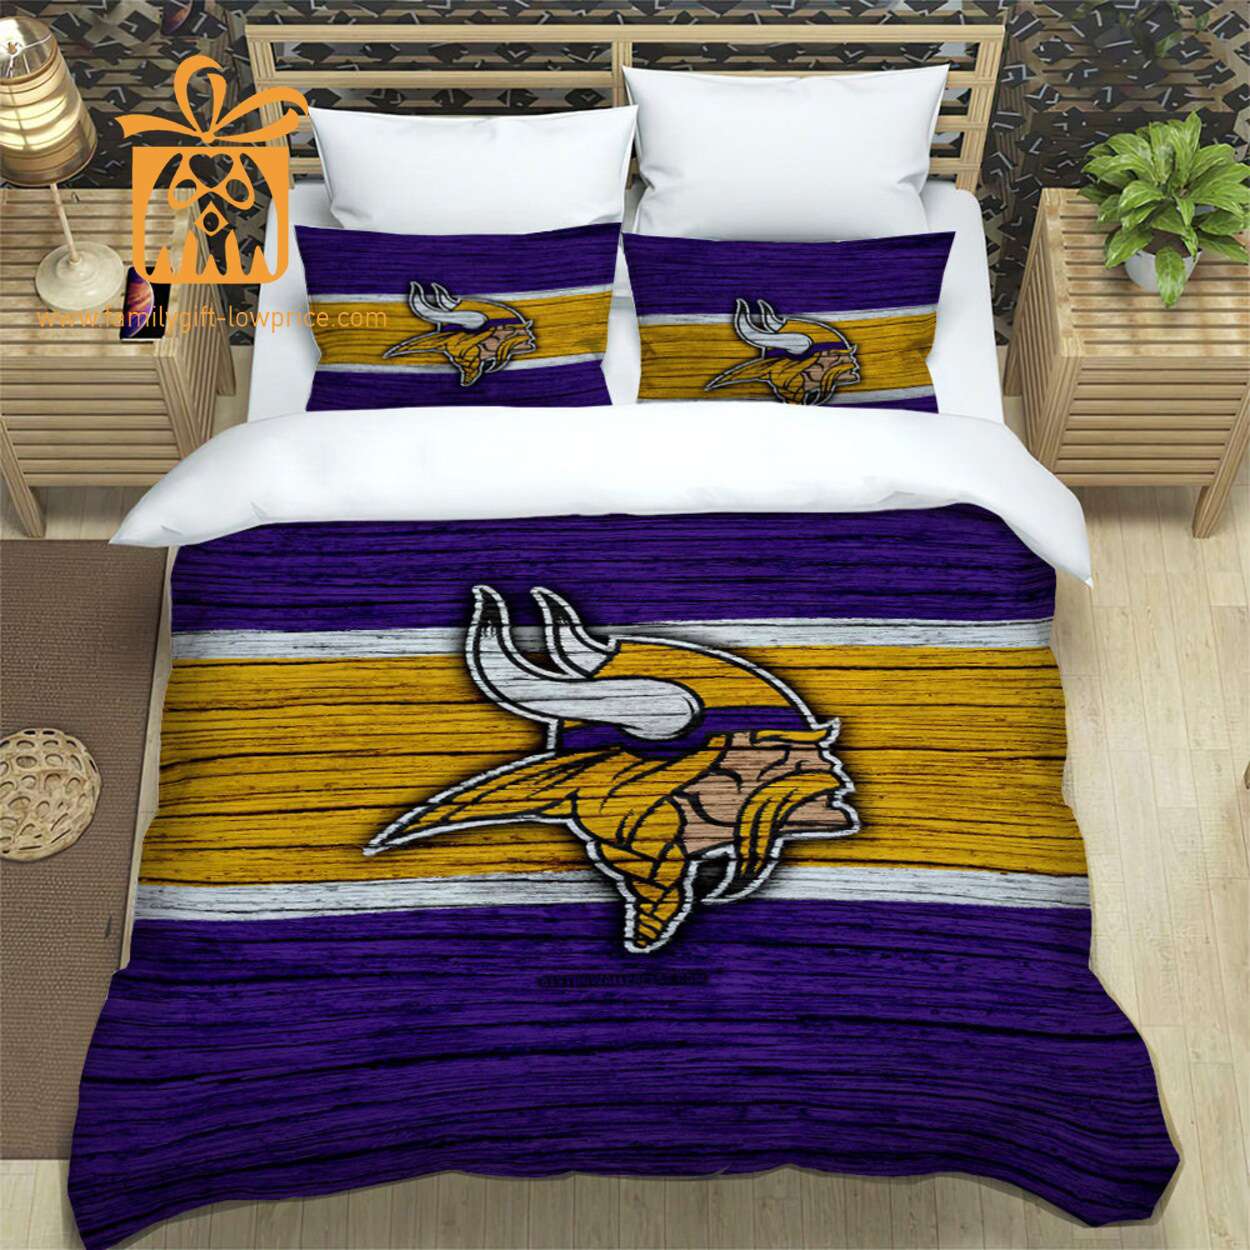 Minnesota Vikings Bedding NFL Set, Custom Cute Bed Sets with Name & Number, Minnesota Vikings Gifts